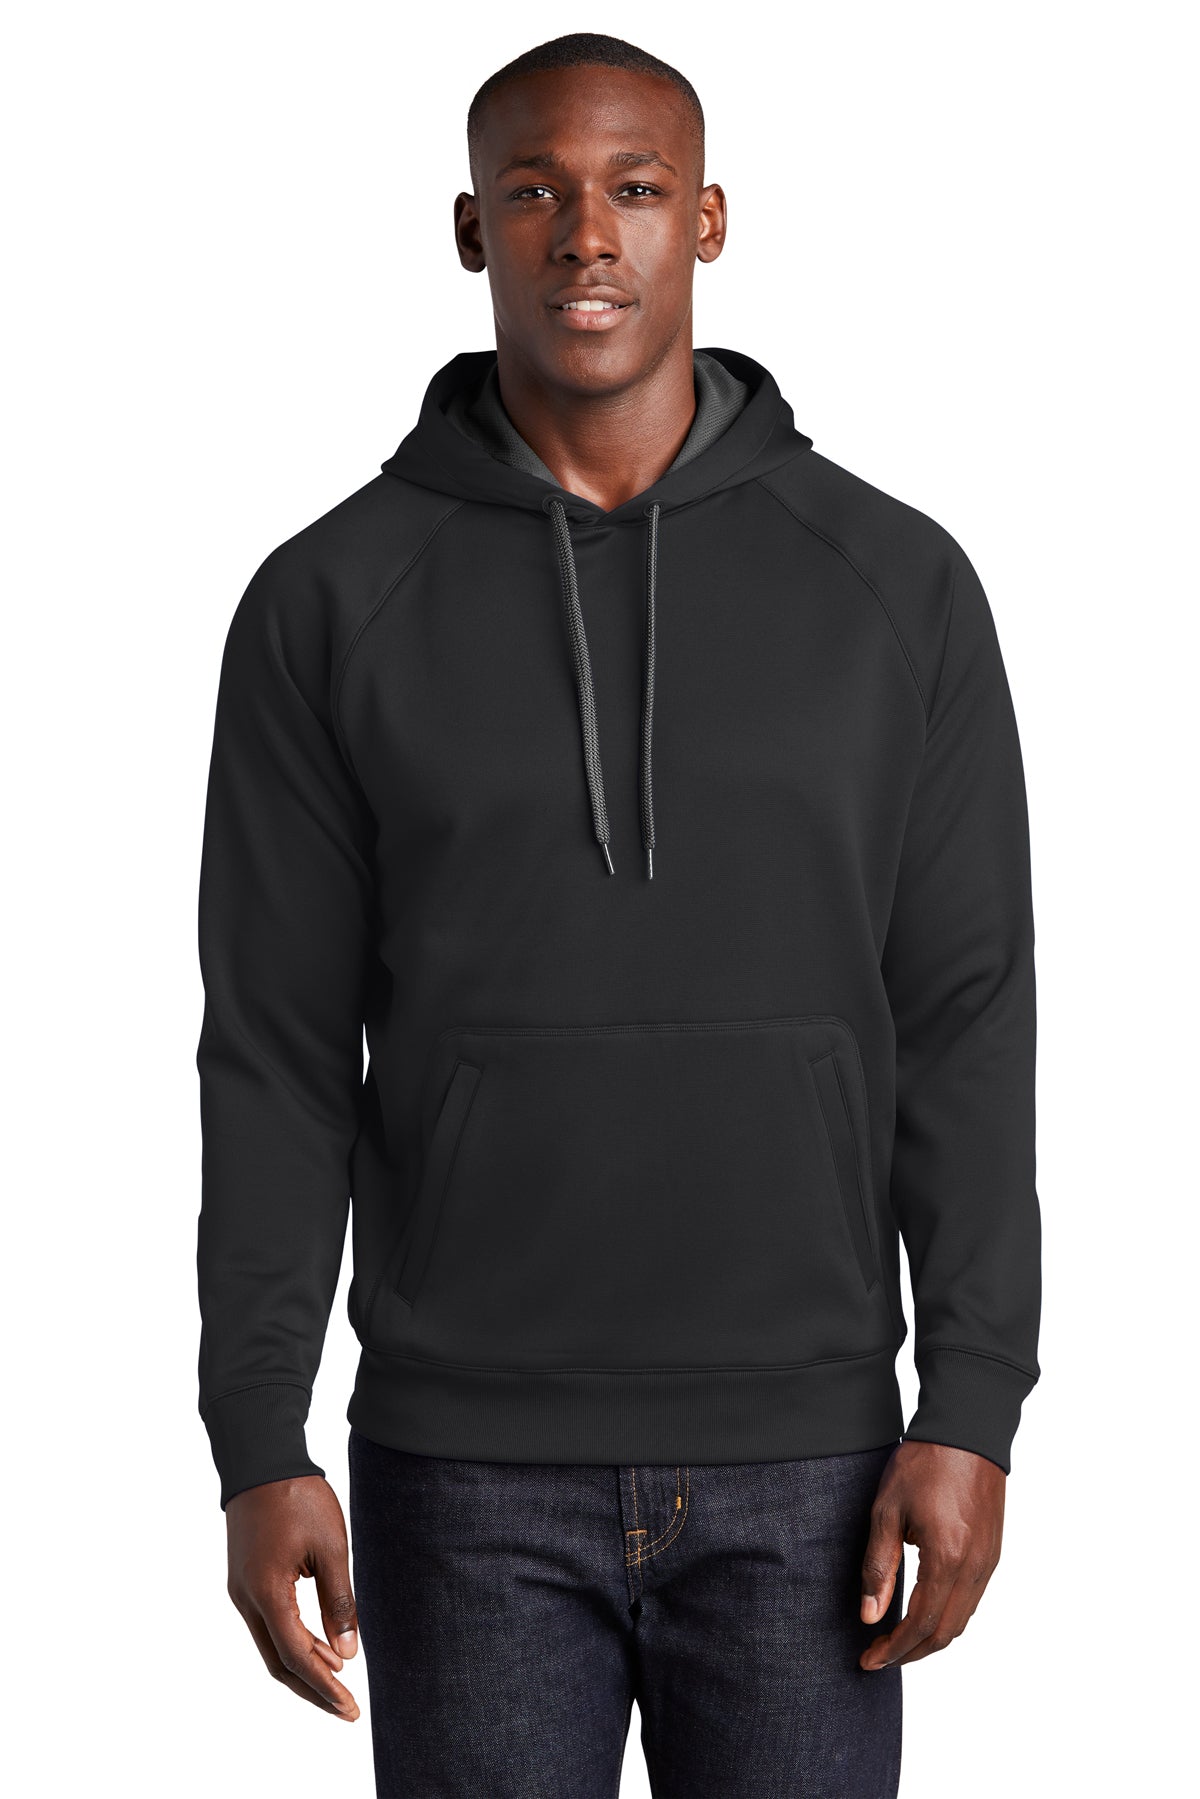 USASMDC Logo Sport-Tek® Tech Fleece Hooded Sweatshirt - ST250